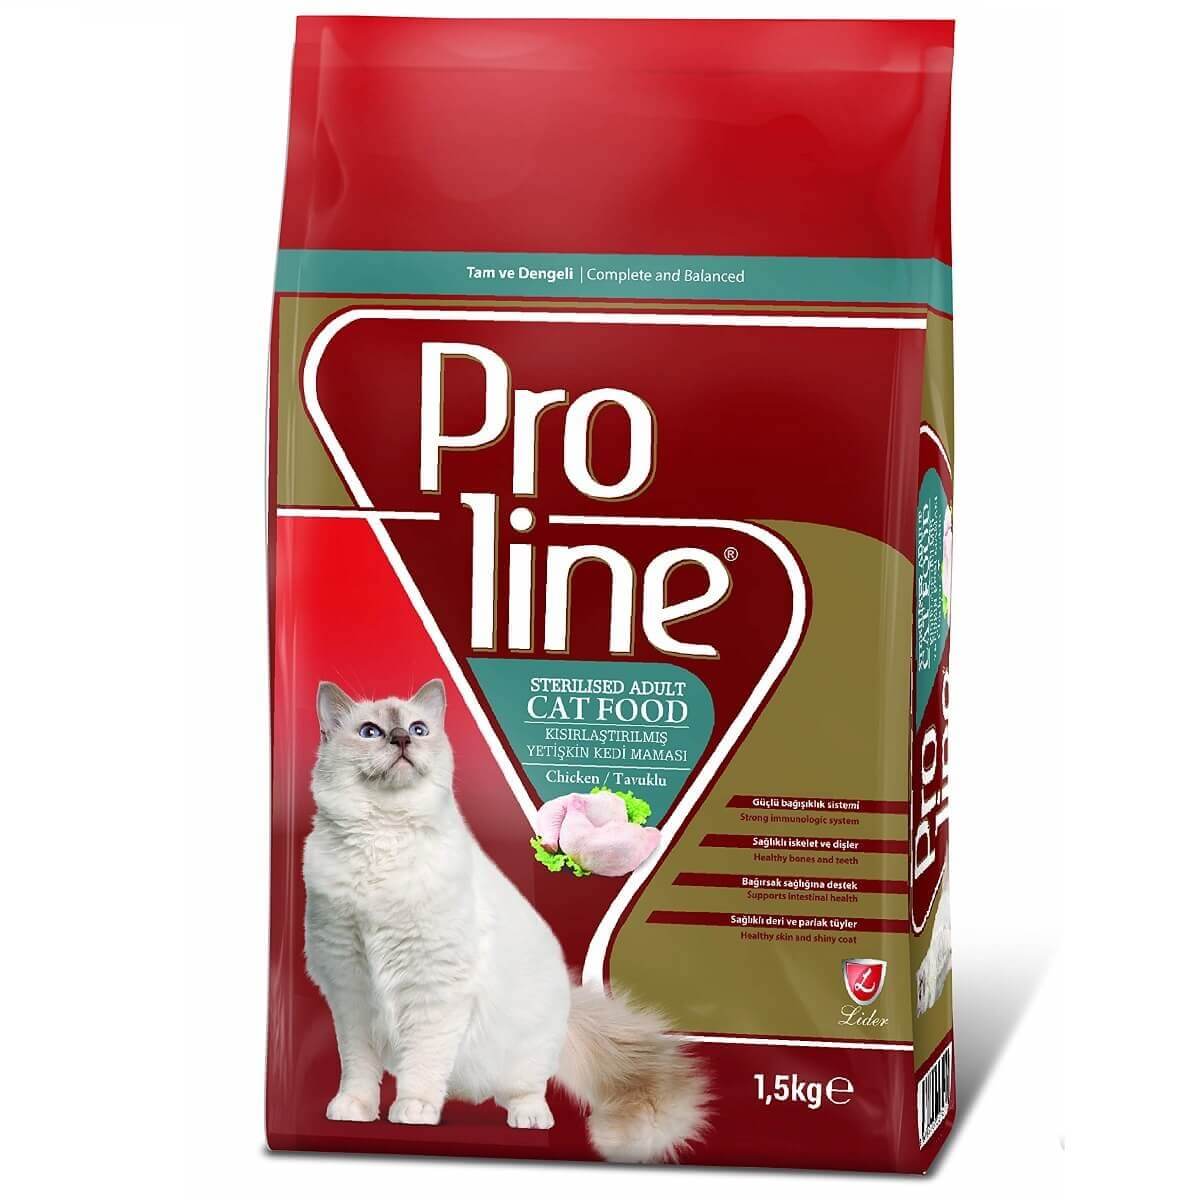 Proline Cat Food – Sterilized, 1.5kg